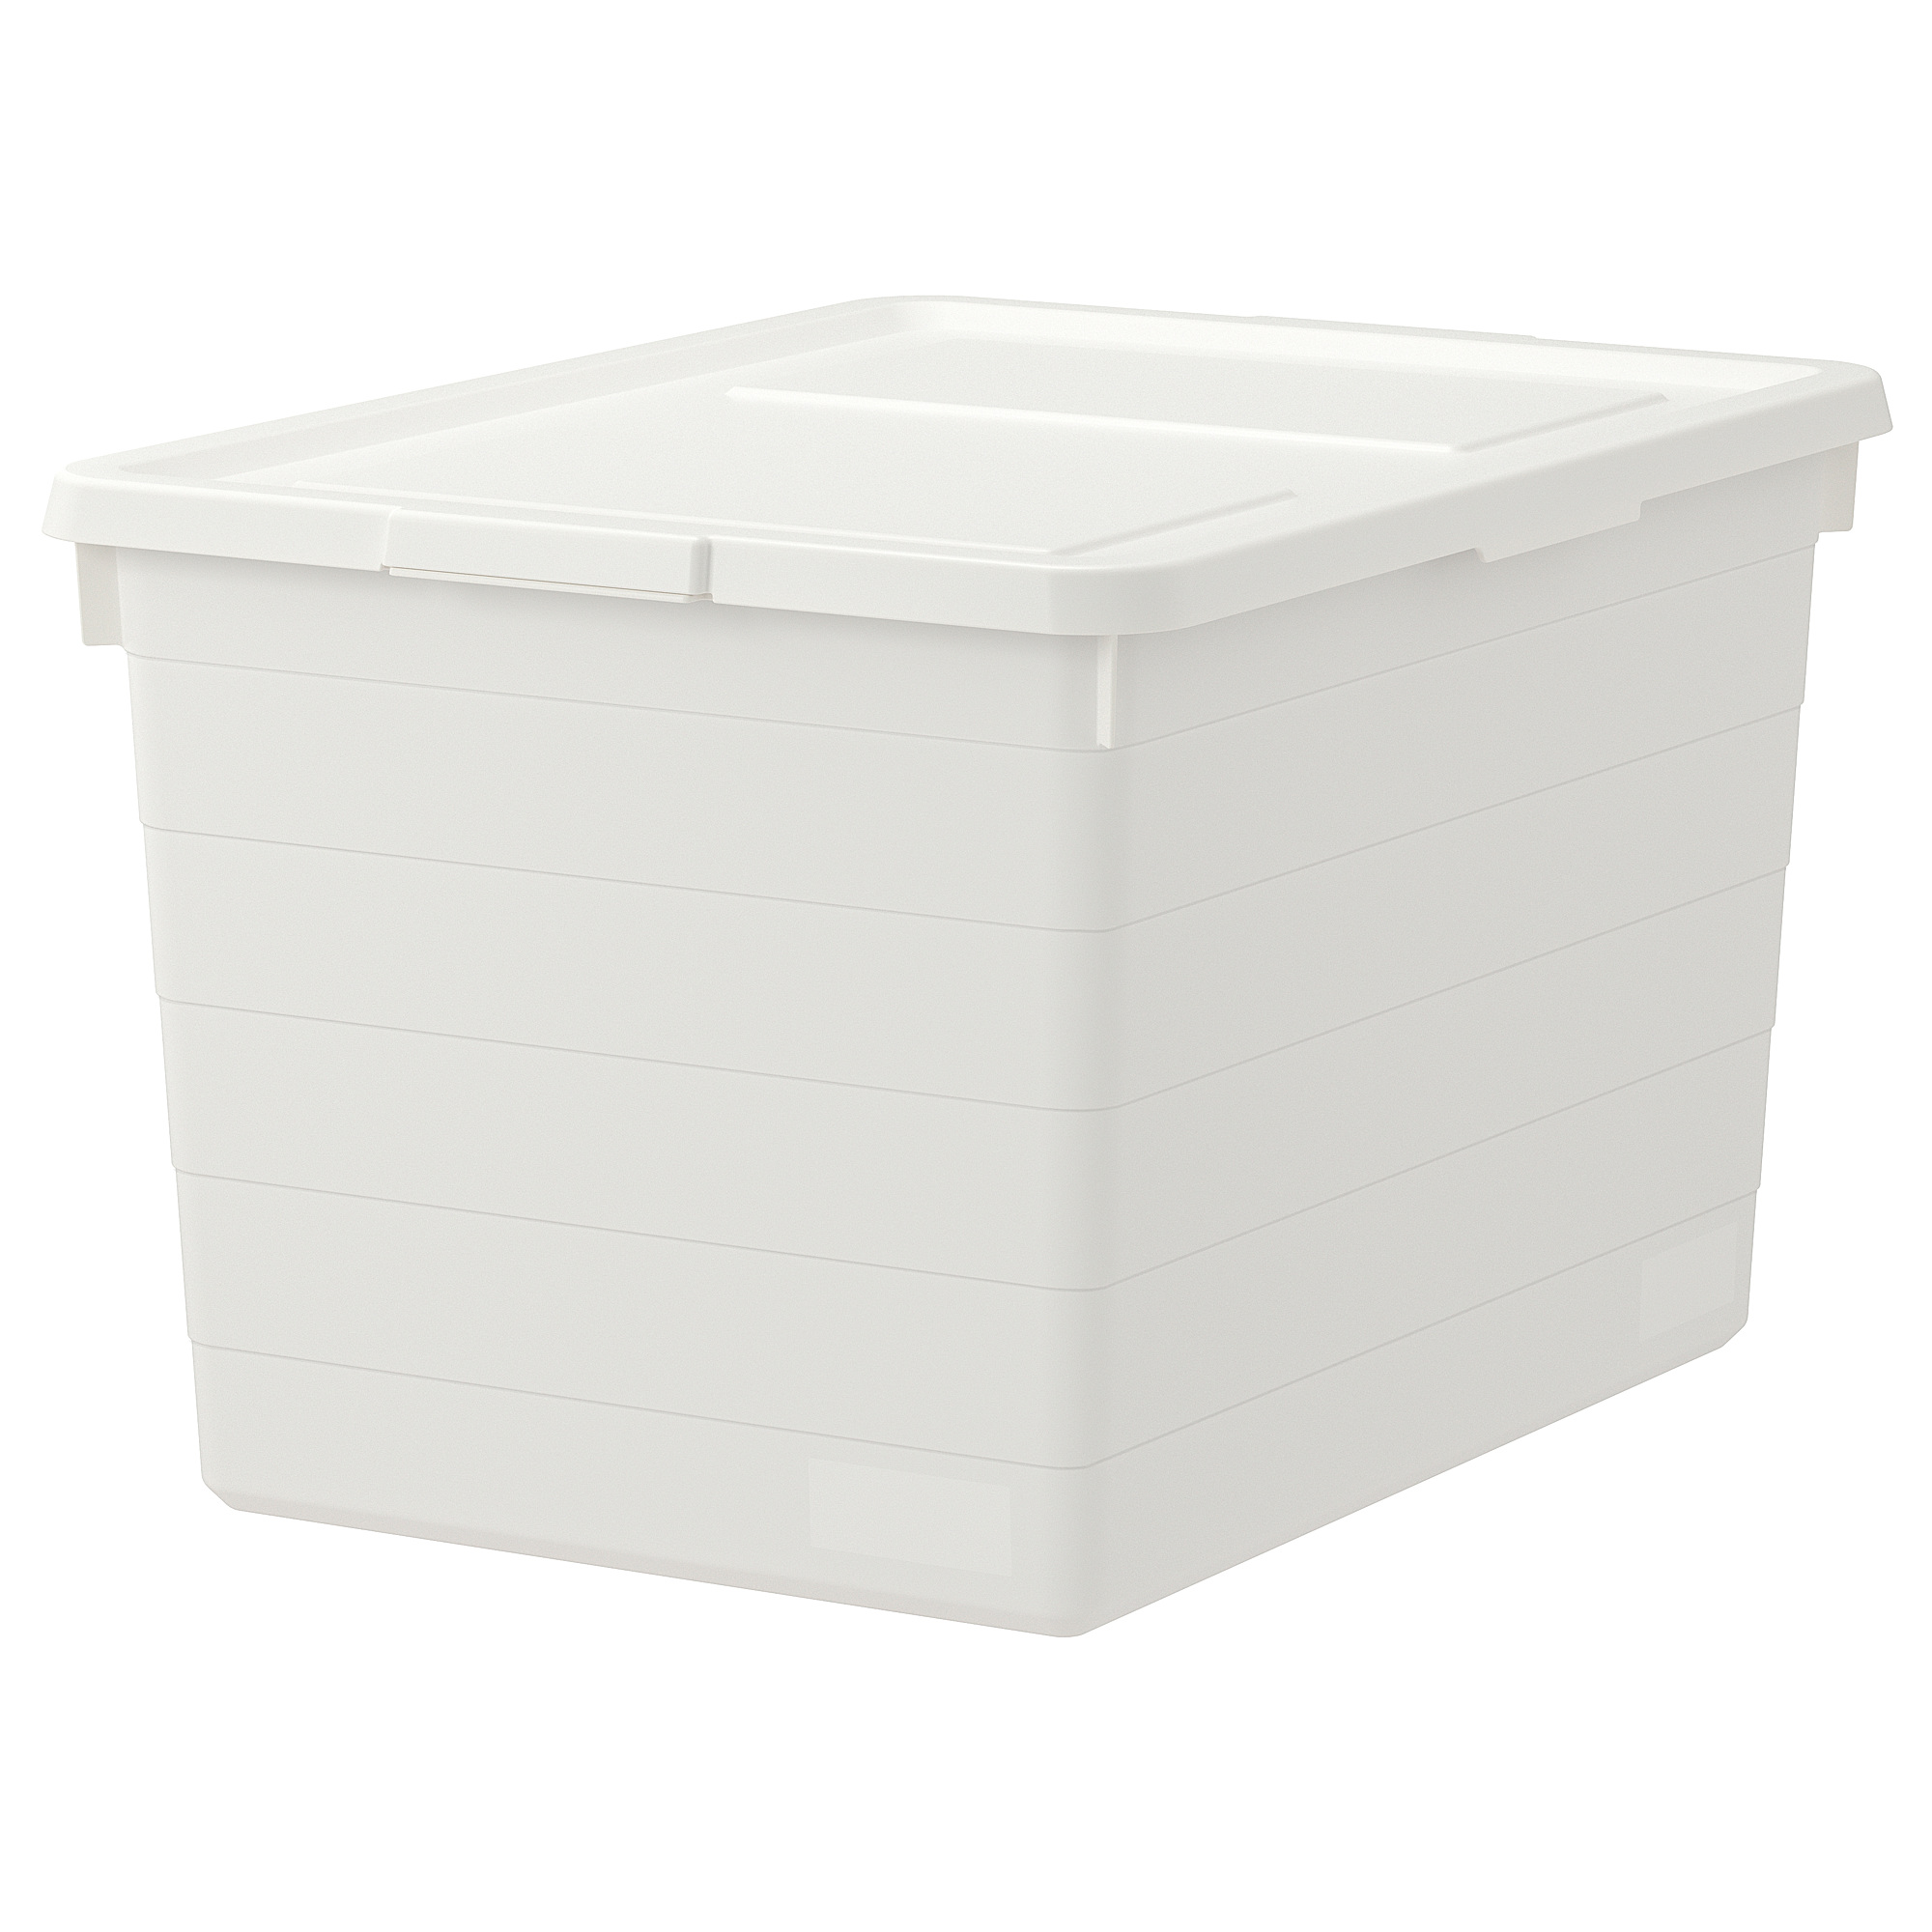 SOCKERBIT box with lid